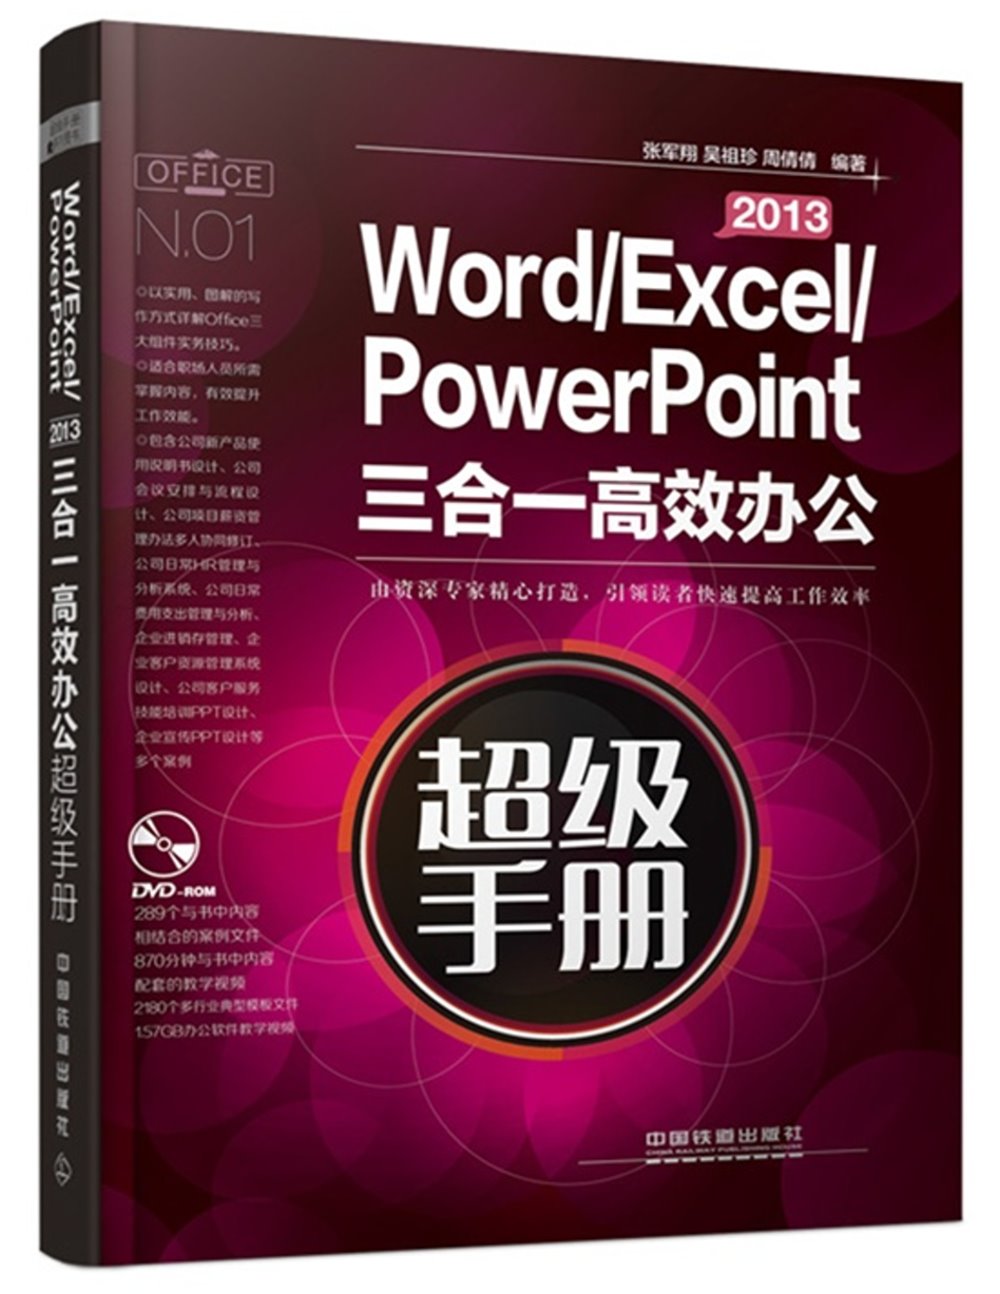 Word/Excel/PowerPoint 2013三合一高效辦公超級手冊